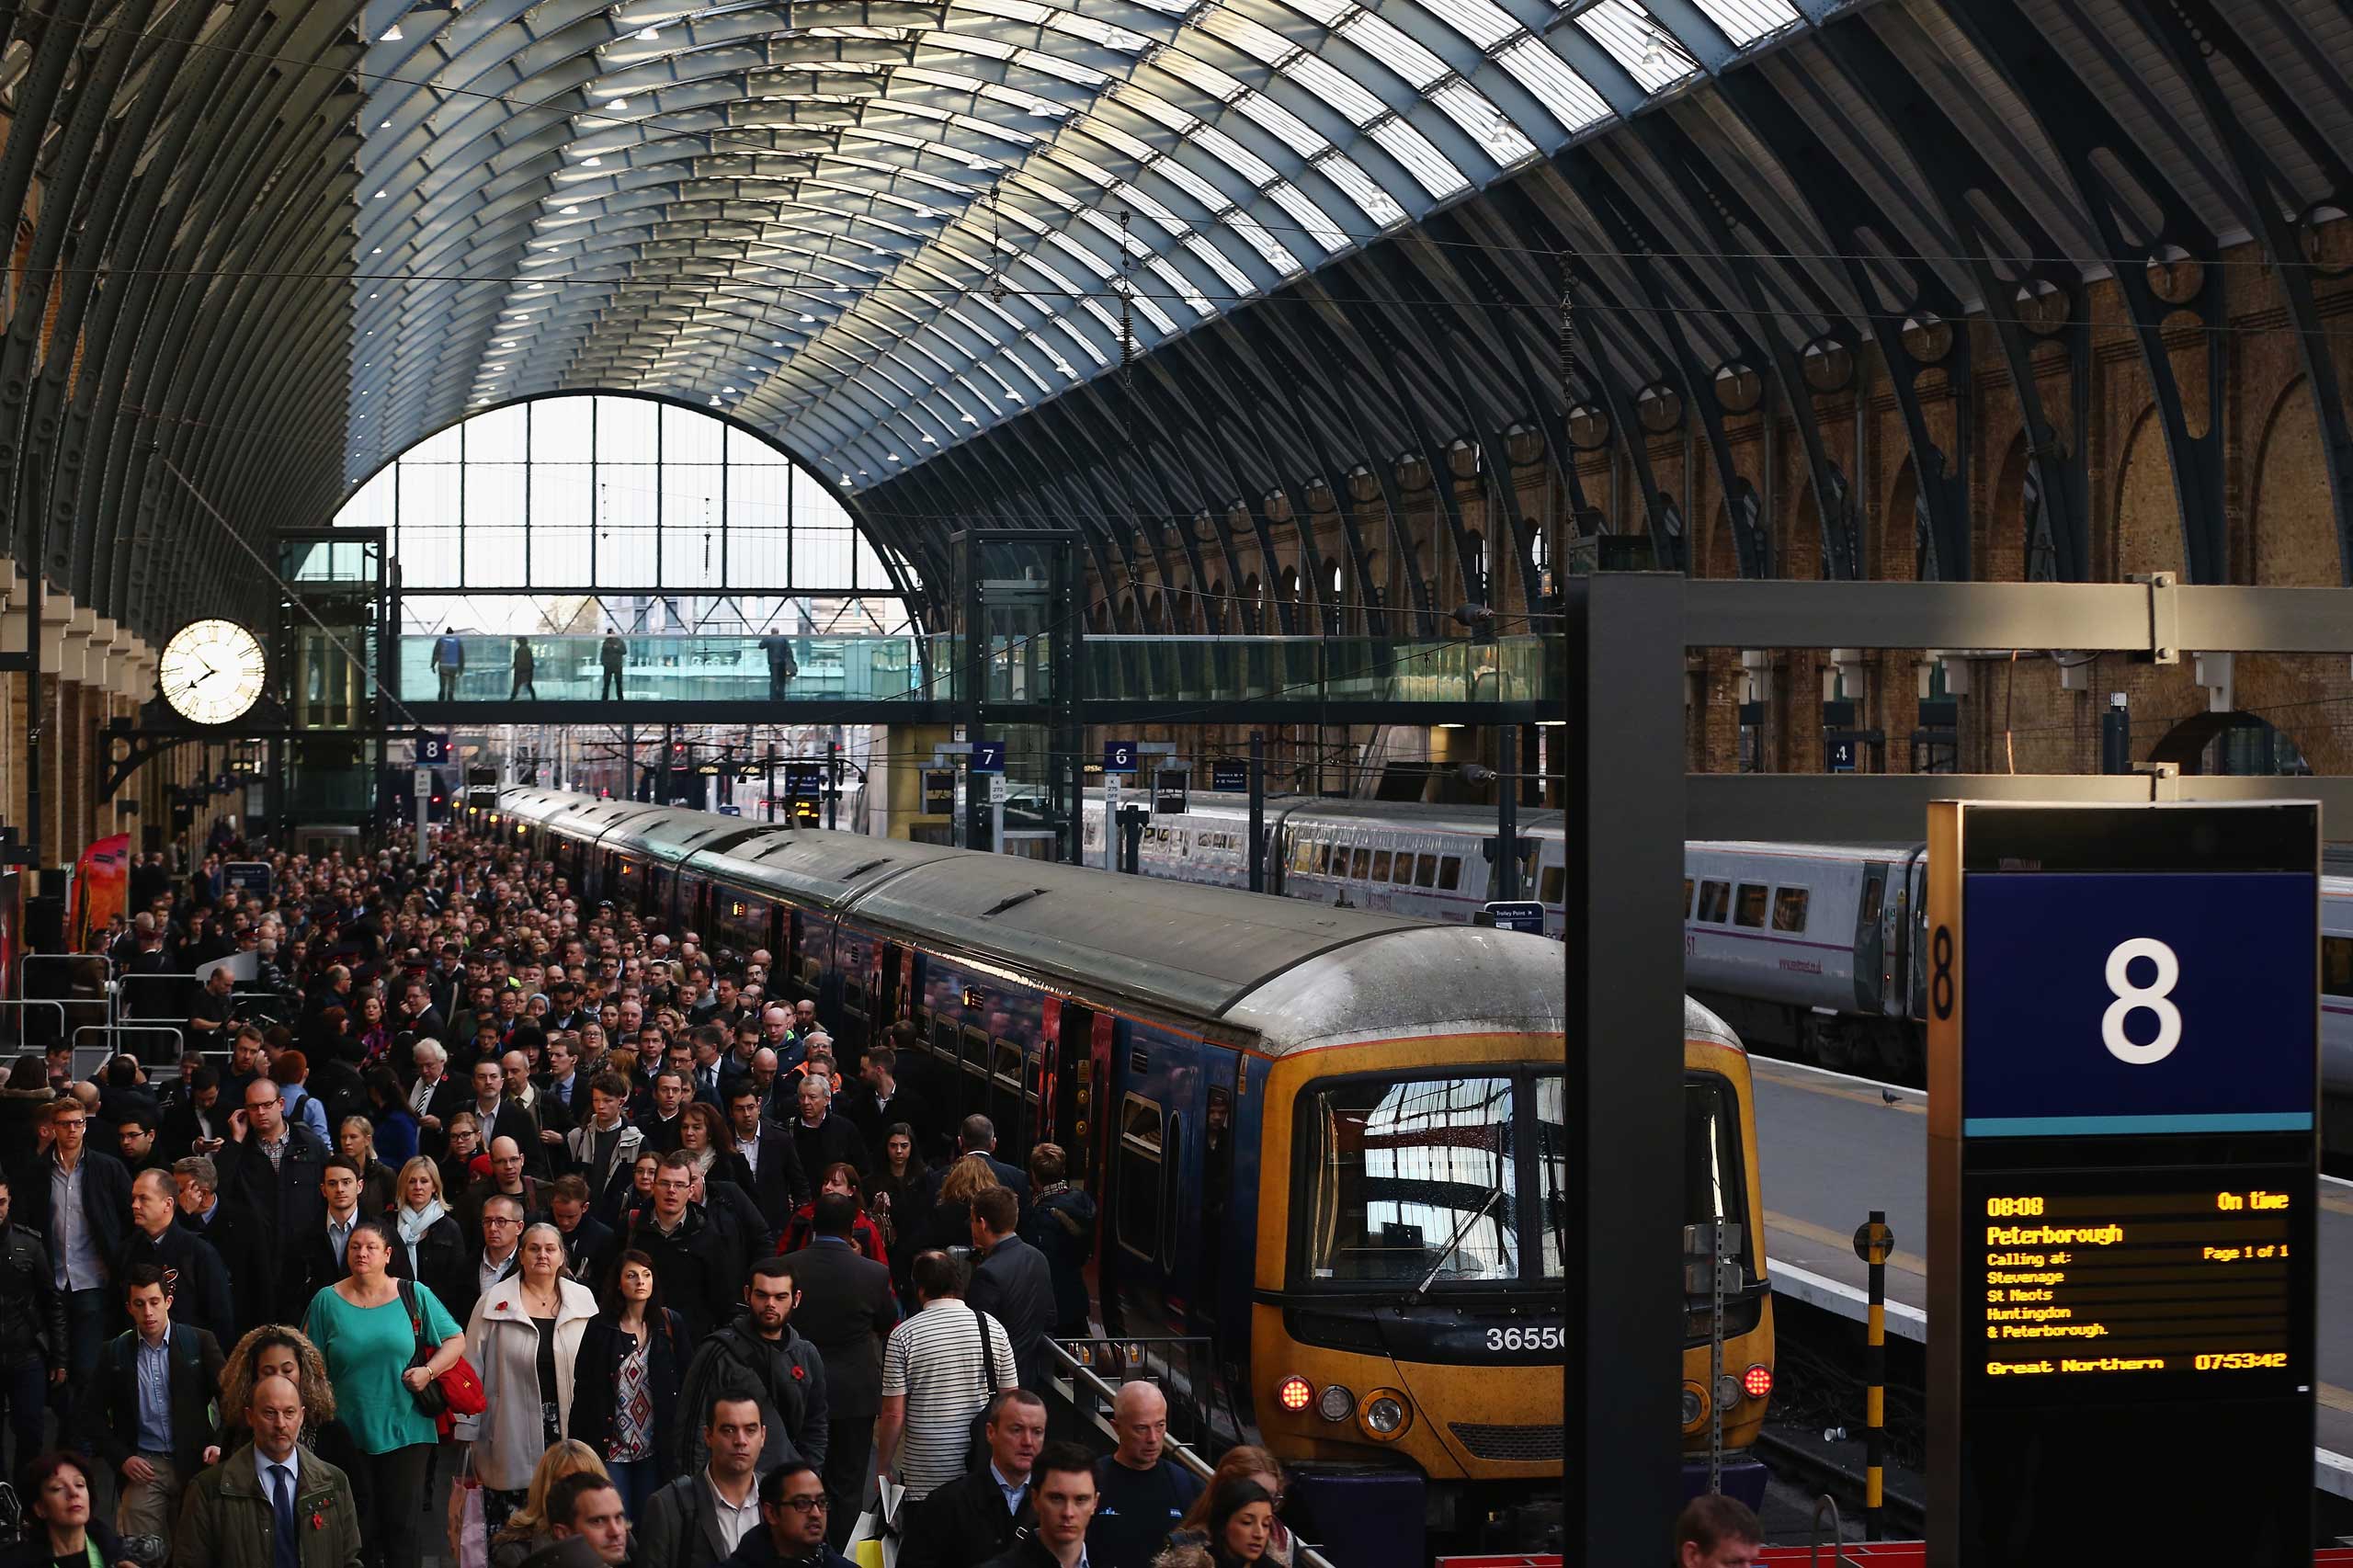 Passengers disembark a train at King's Cross station in London. (Dan Kitwood—Getty Images)